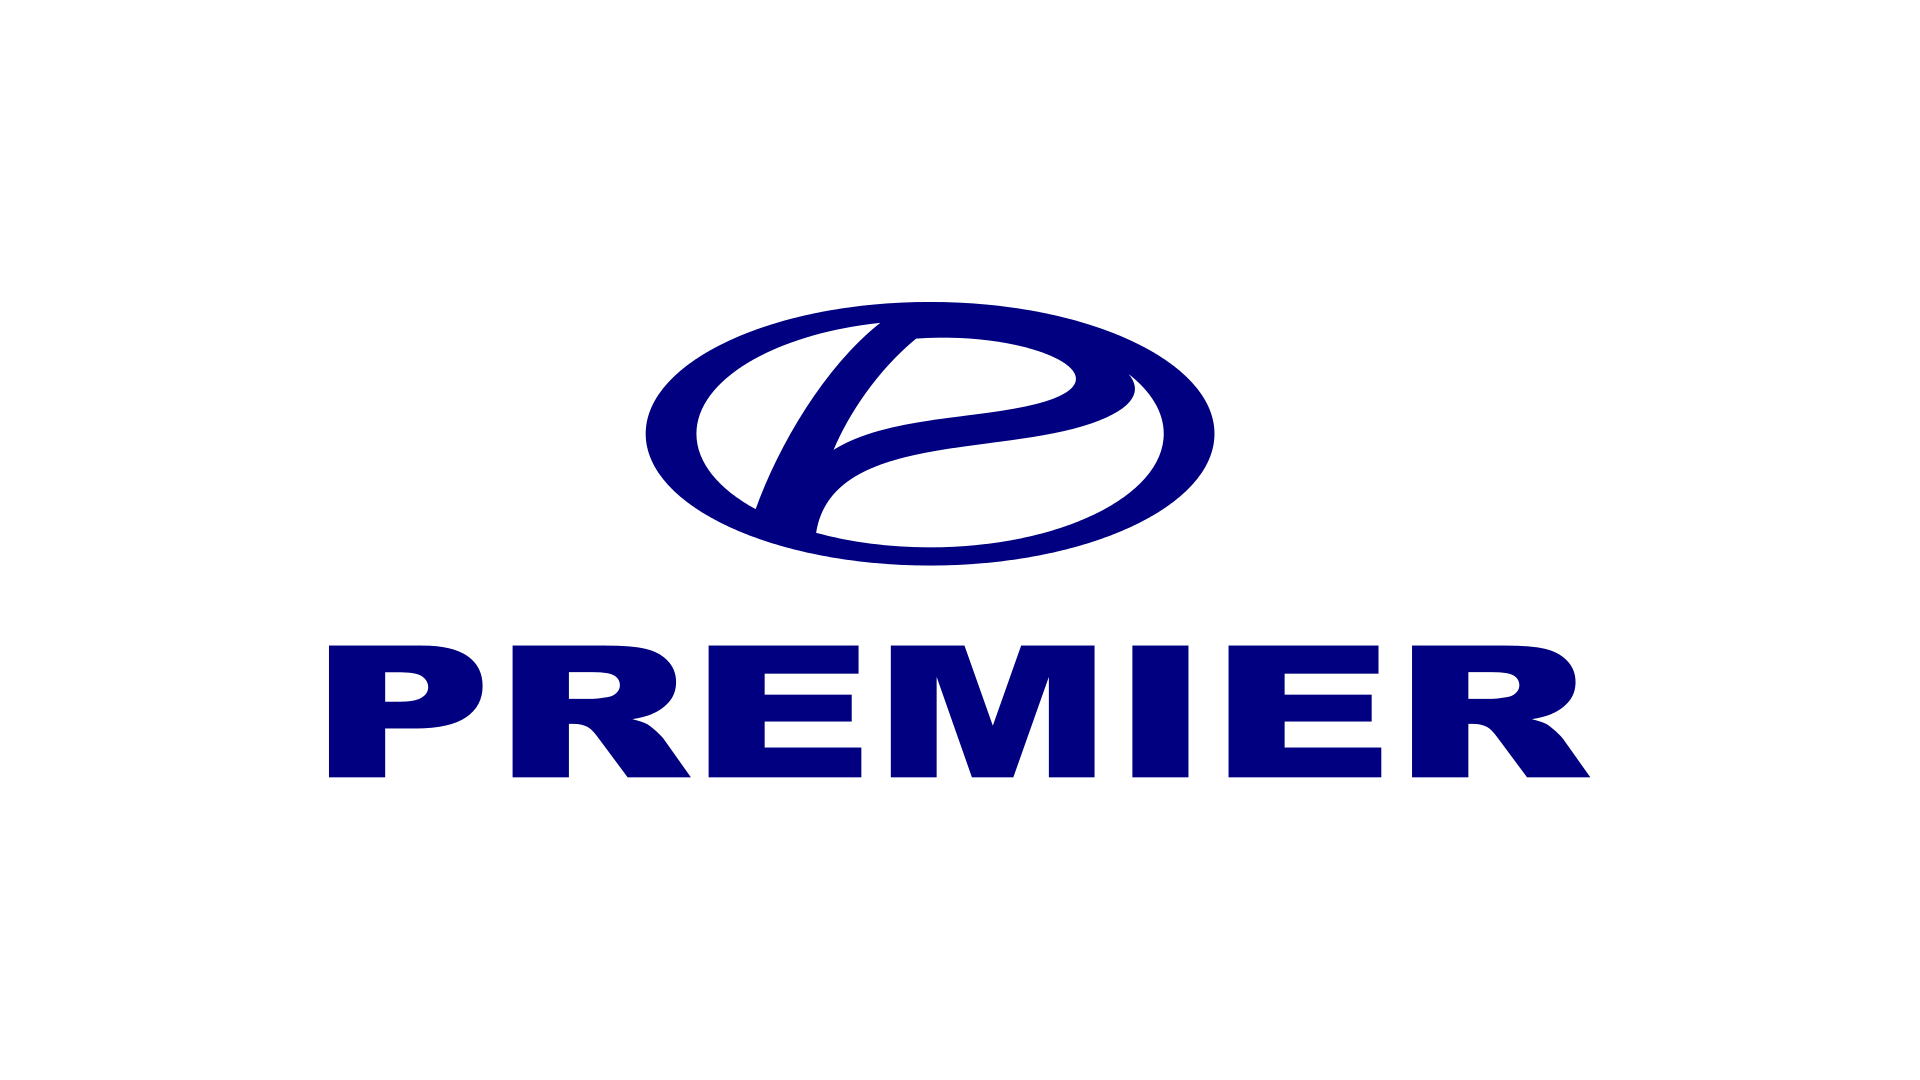 Premier Logo, HD Png, Information.